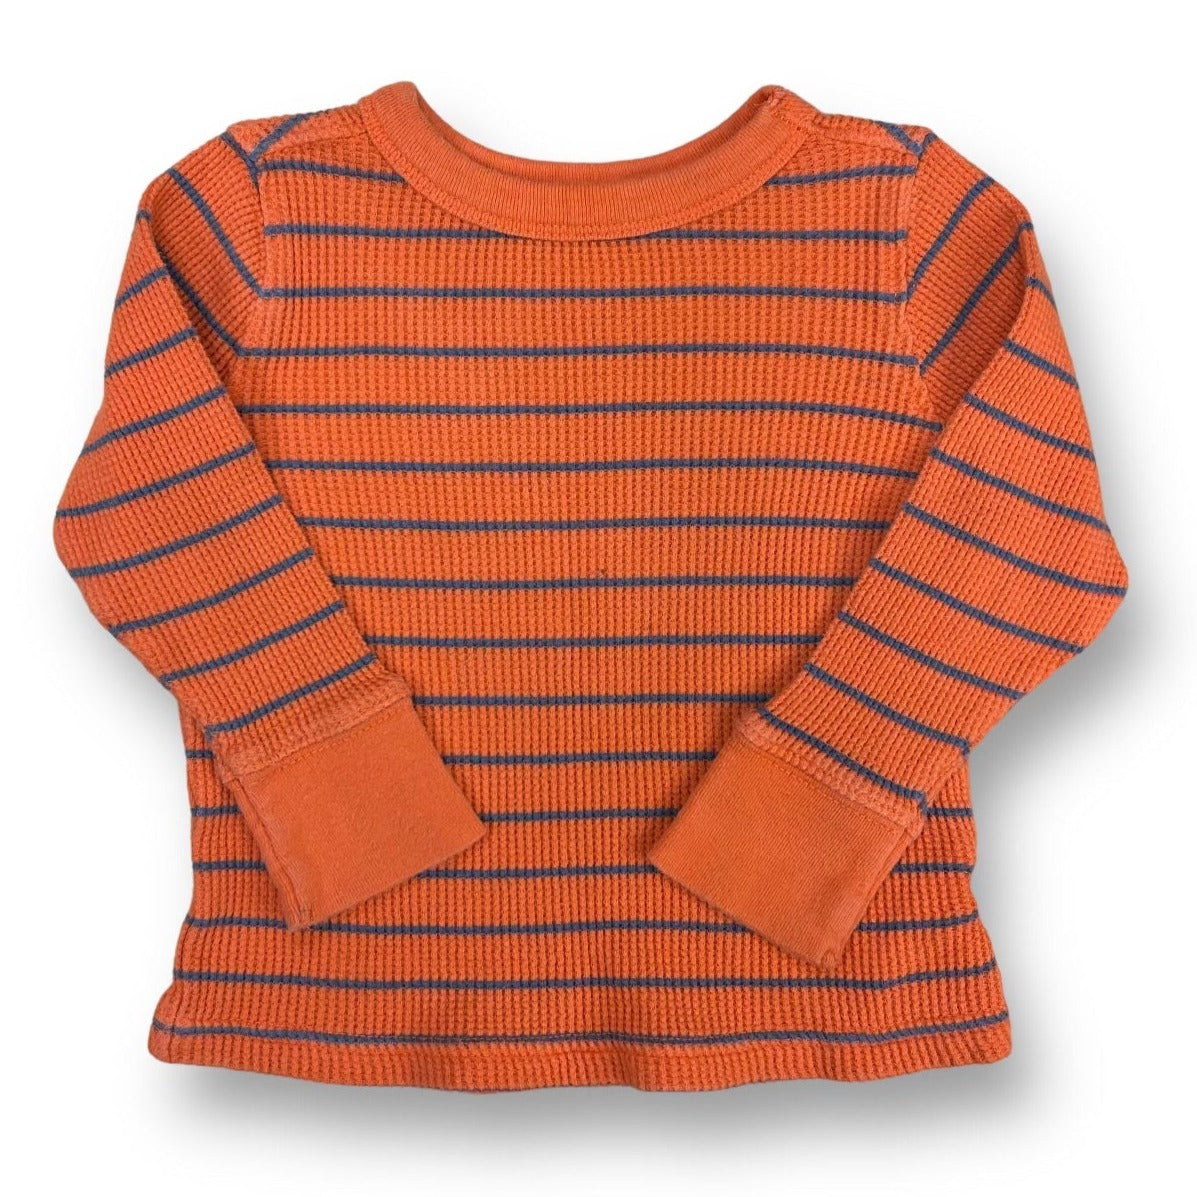 Boys Old Navy Size 12-18 Months Orange Thermal Long-Sleeve Shirt